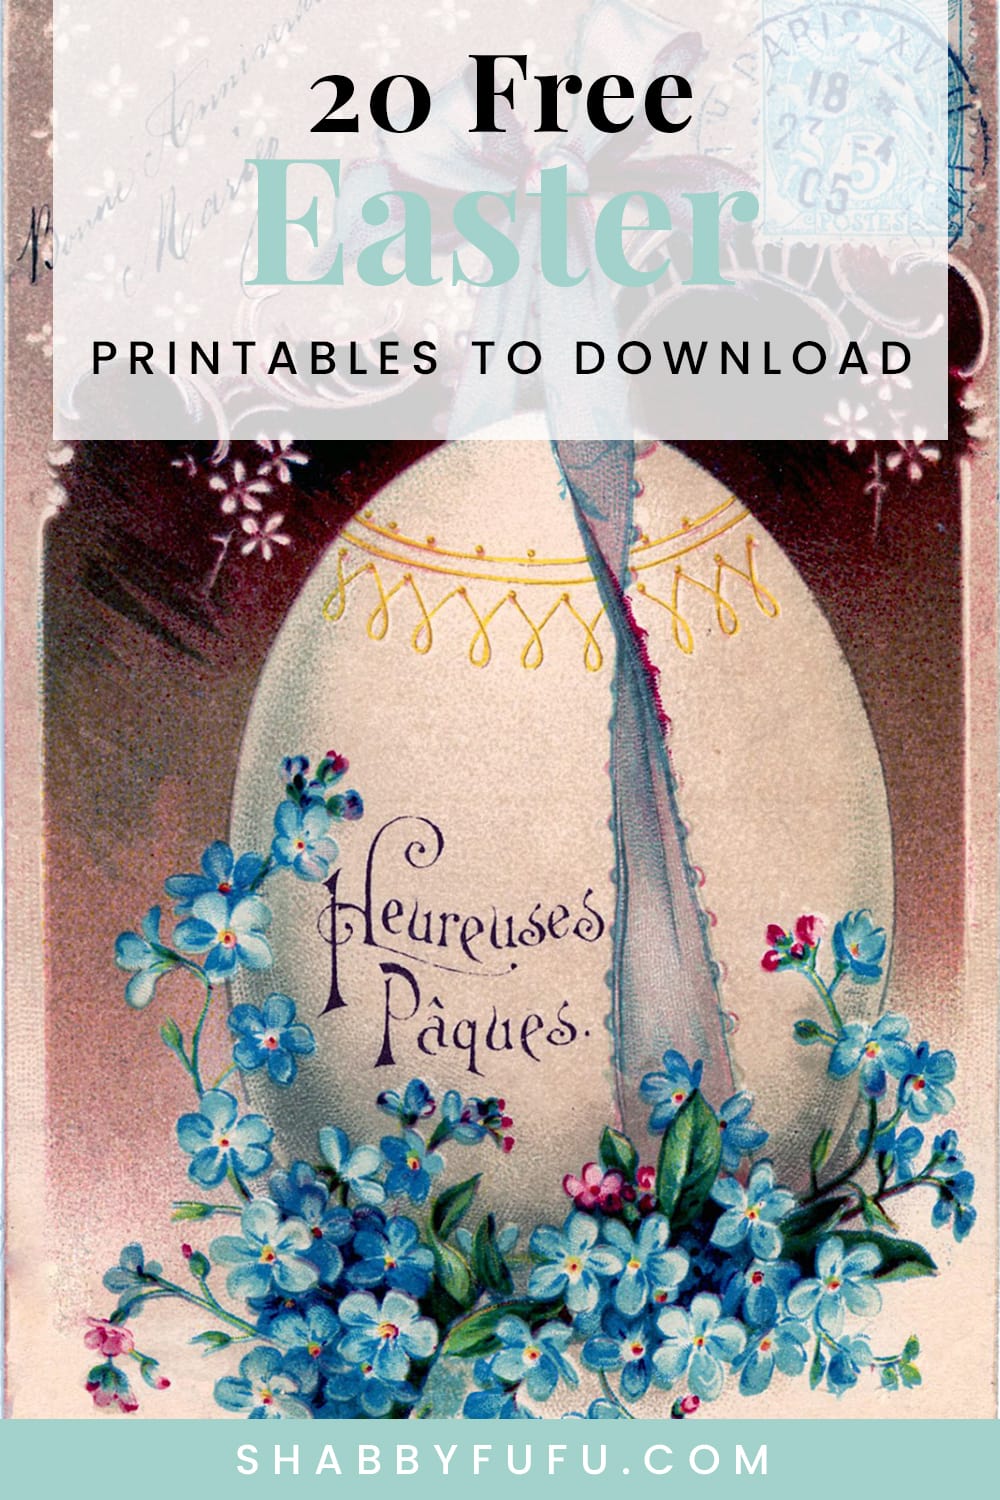 Free Printable Easter Wall Art - 20 Gorgeous Prints!